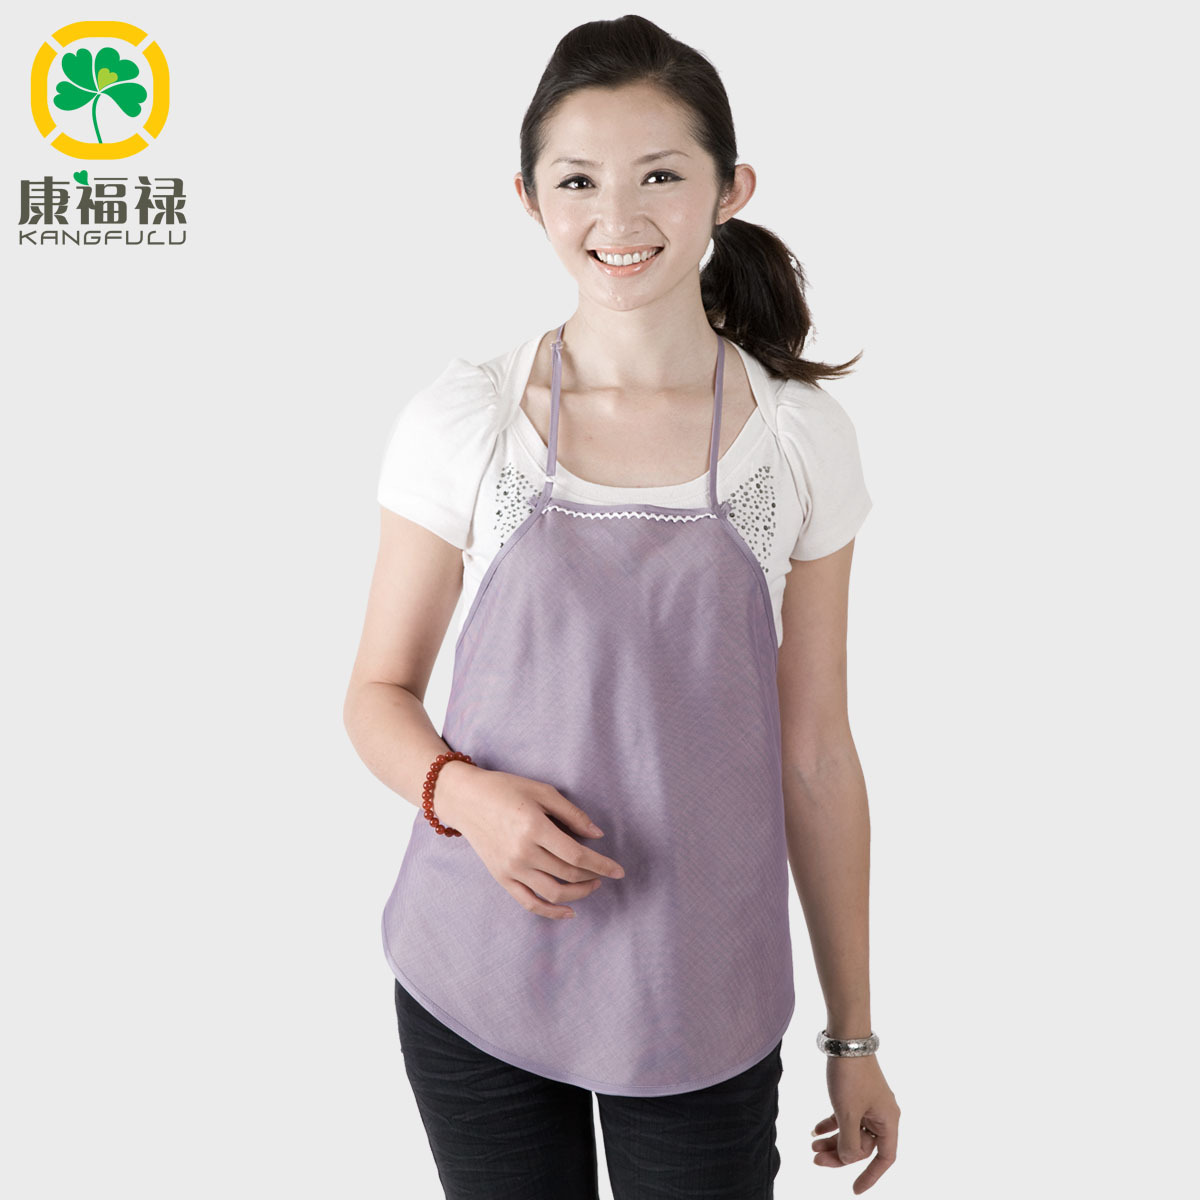 Nano silver apron radiation-resistant y102 maternity clothing